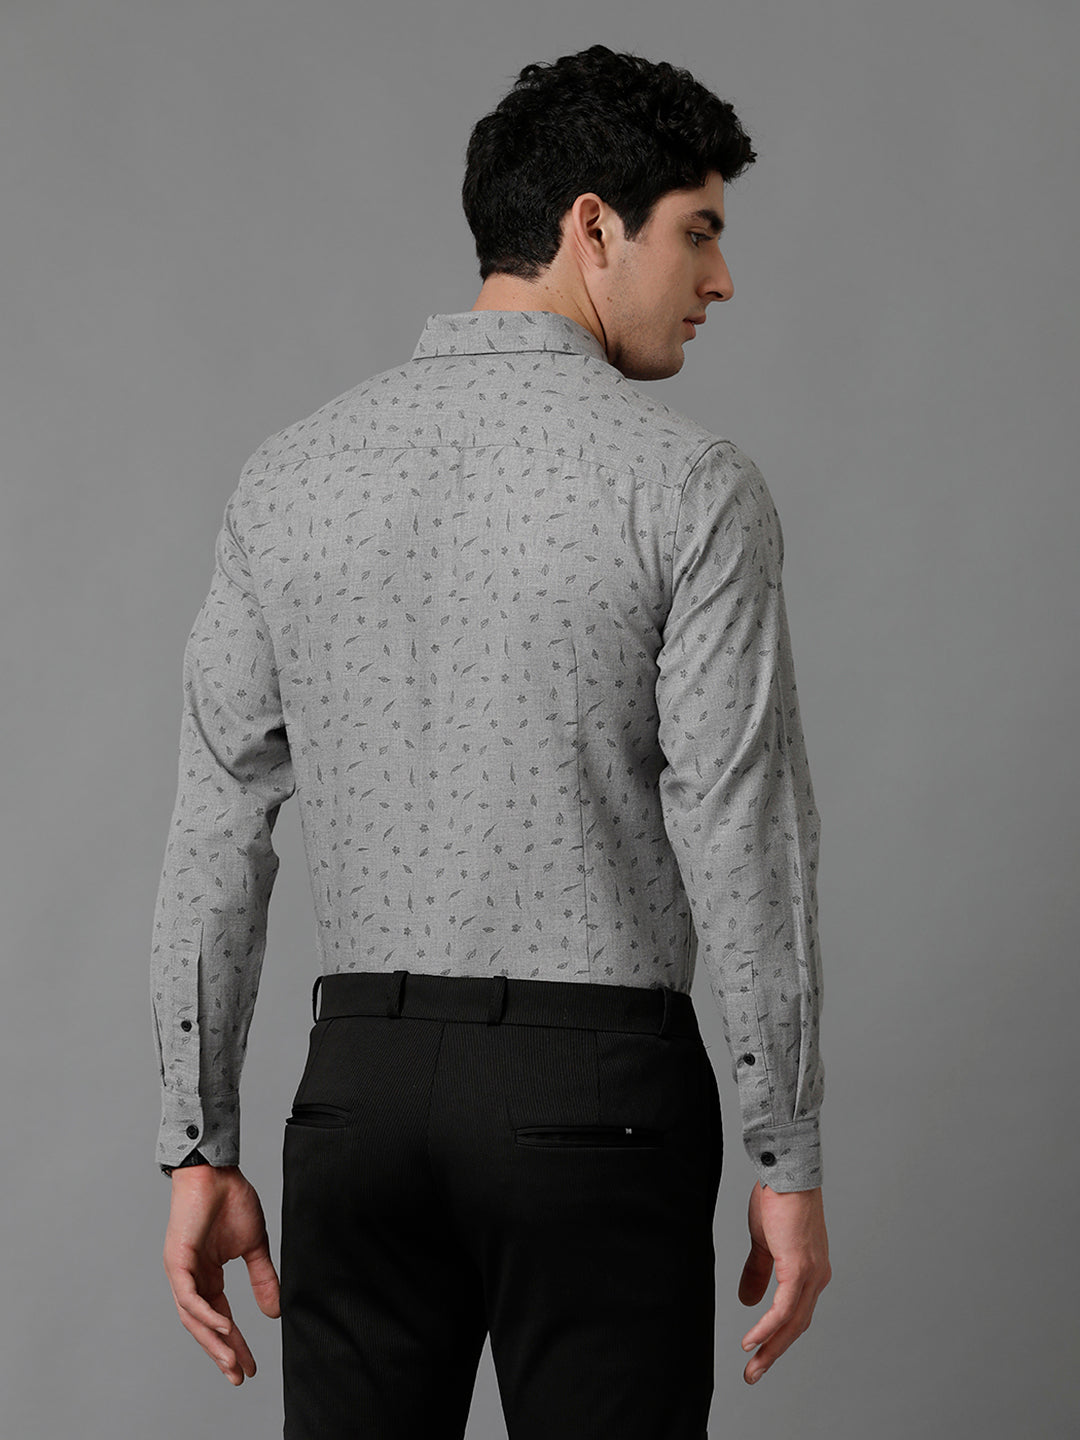 Aldeno Mens Regular Fit Floral Aop Grey/Black Casual Cotton Shirt (BLAGAY)